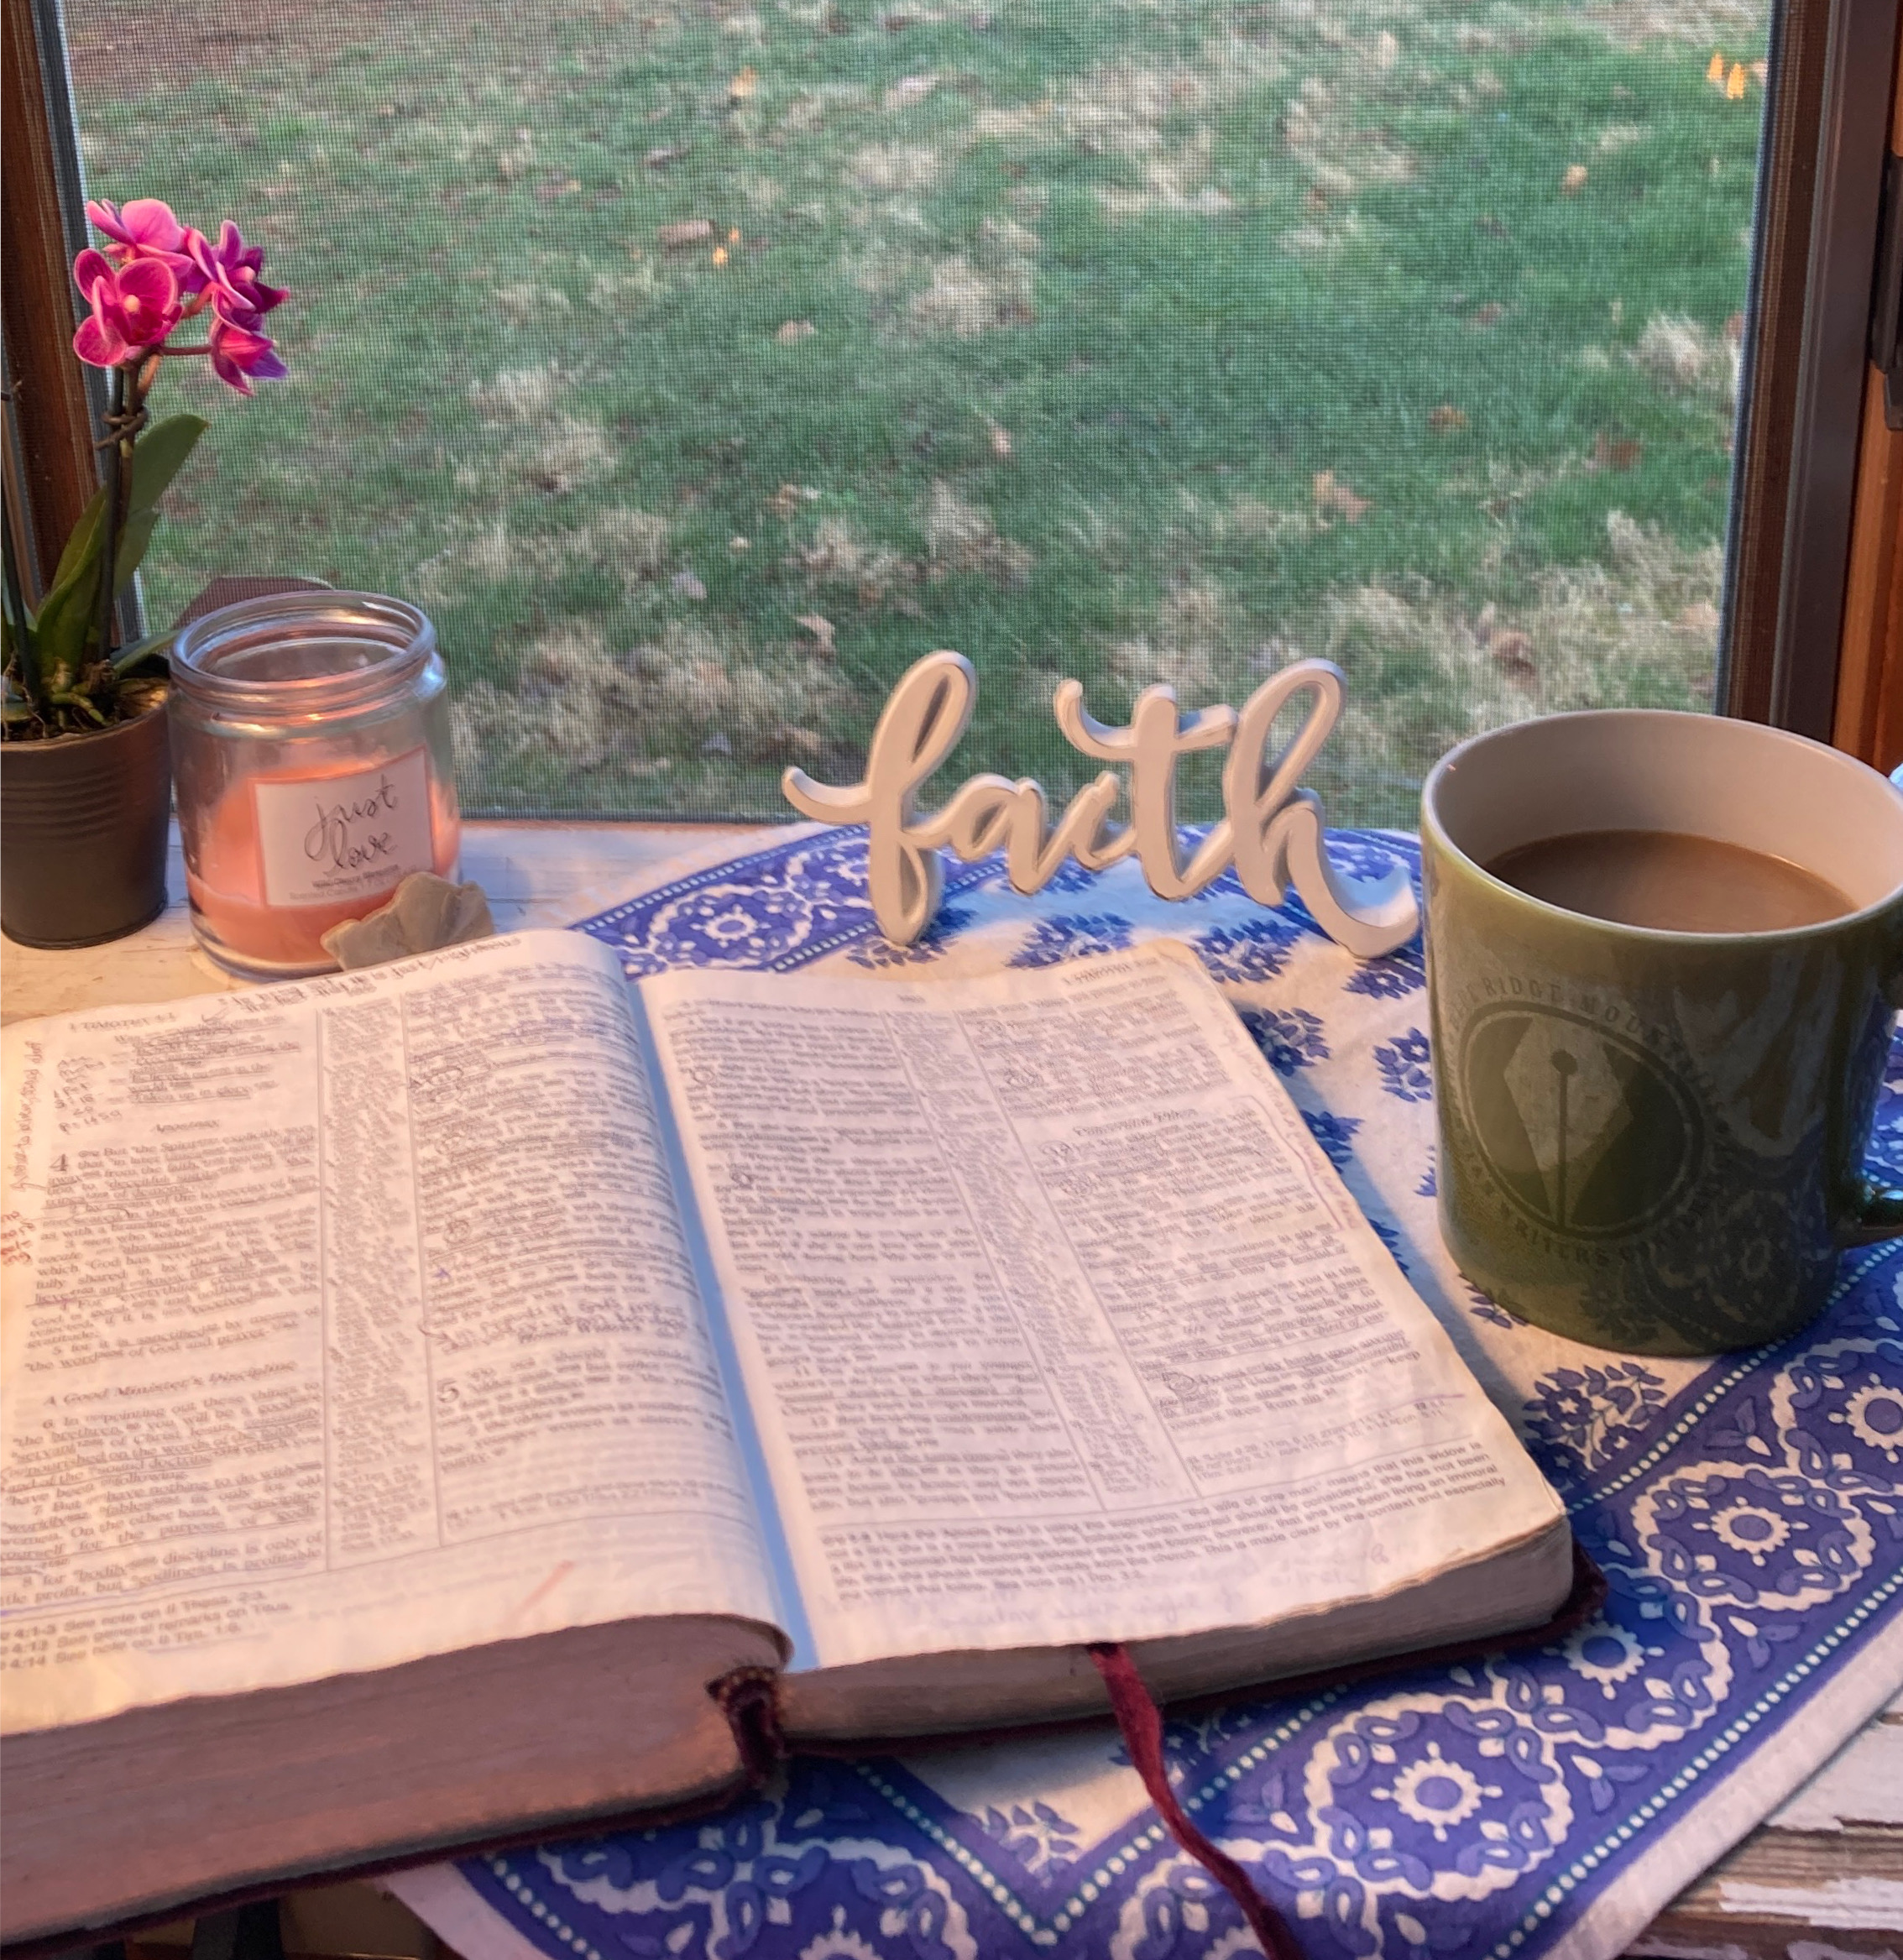 Words, Scripture, Moms, Videos, & My New Study